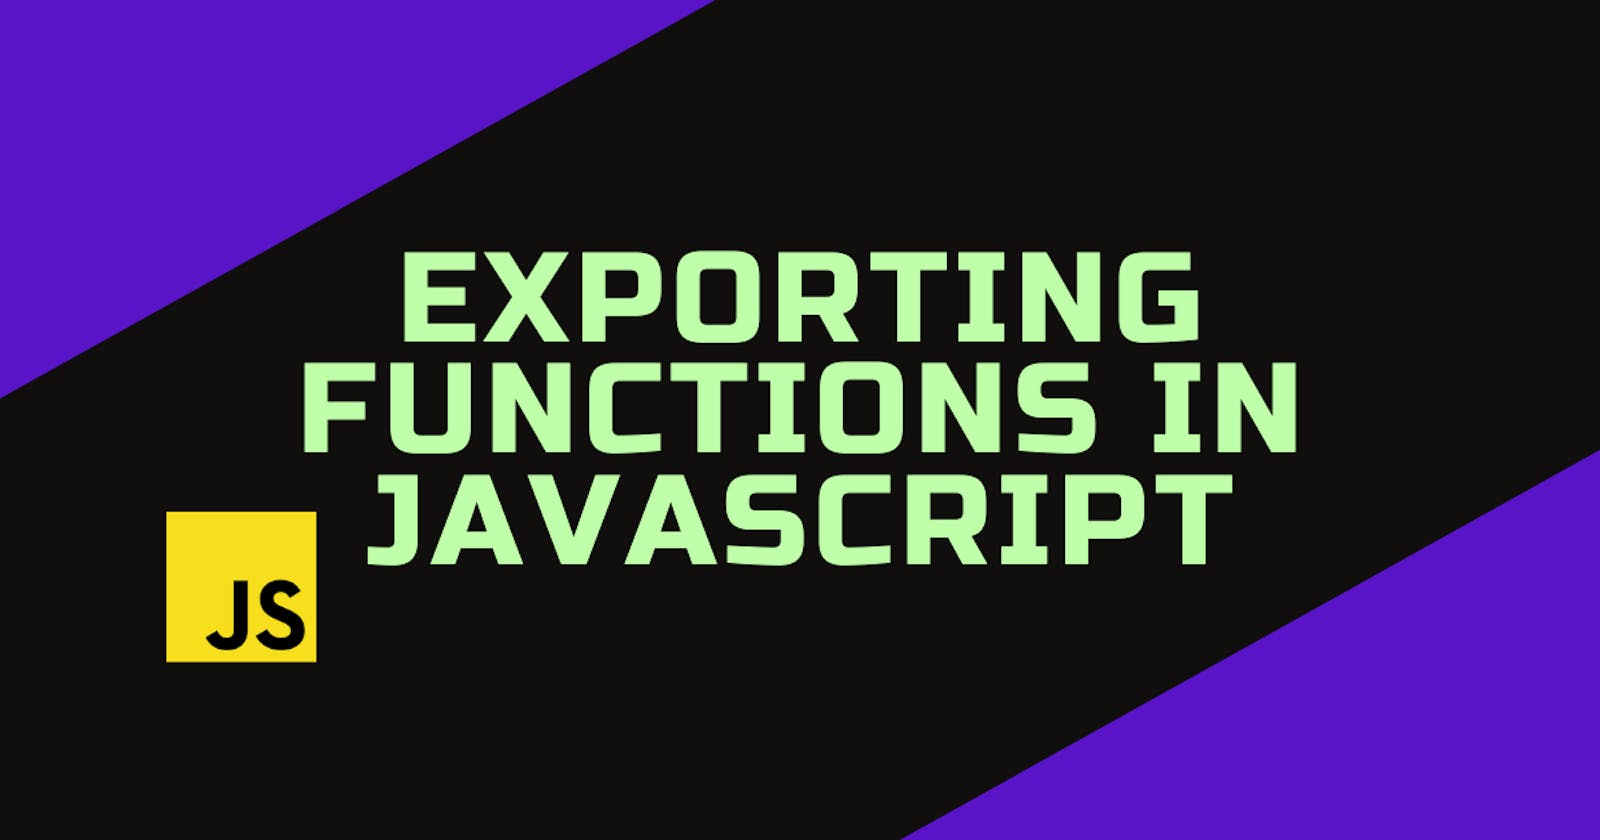 Exporting functions in JavaScript